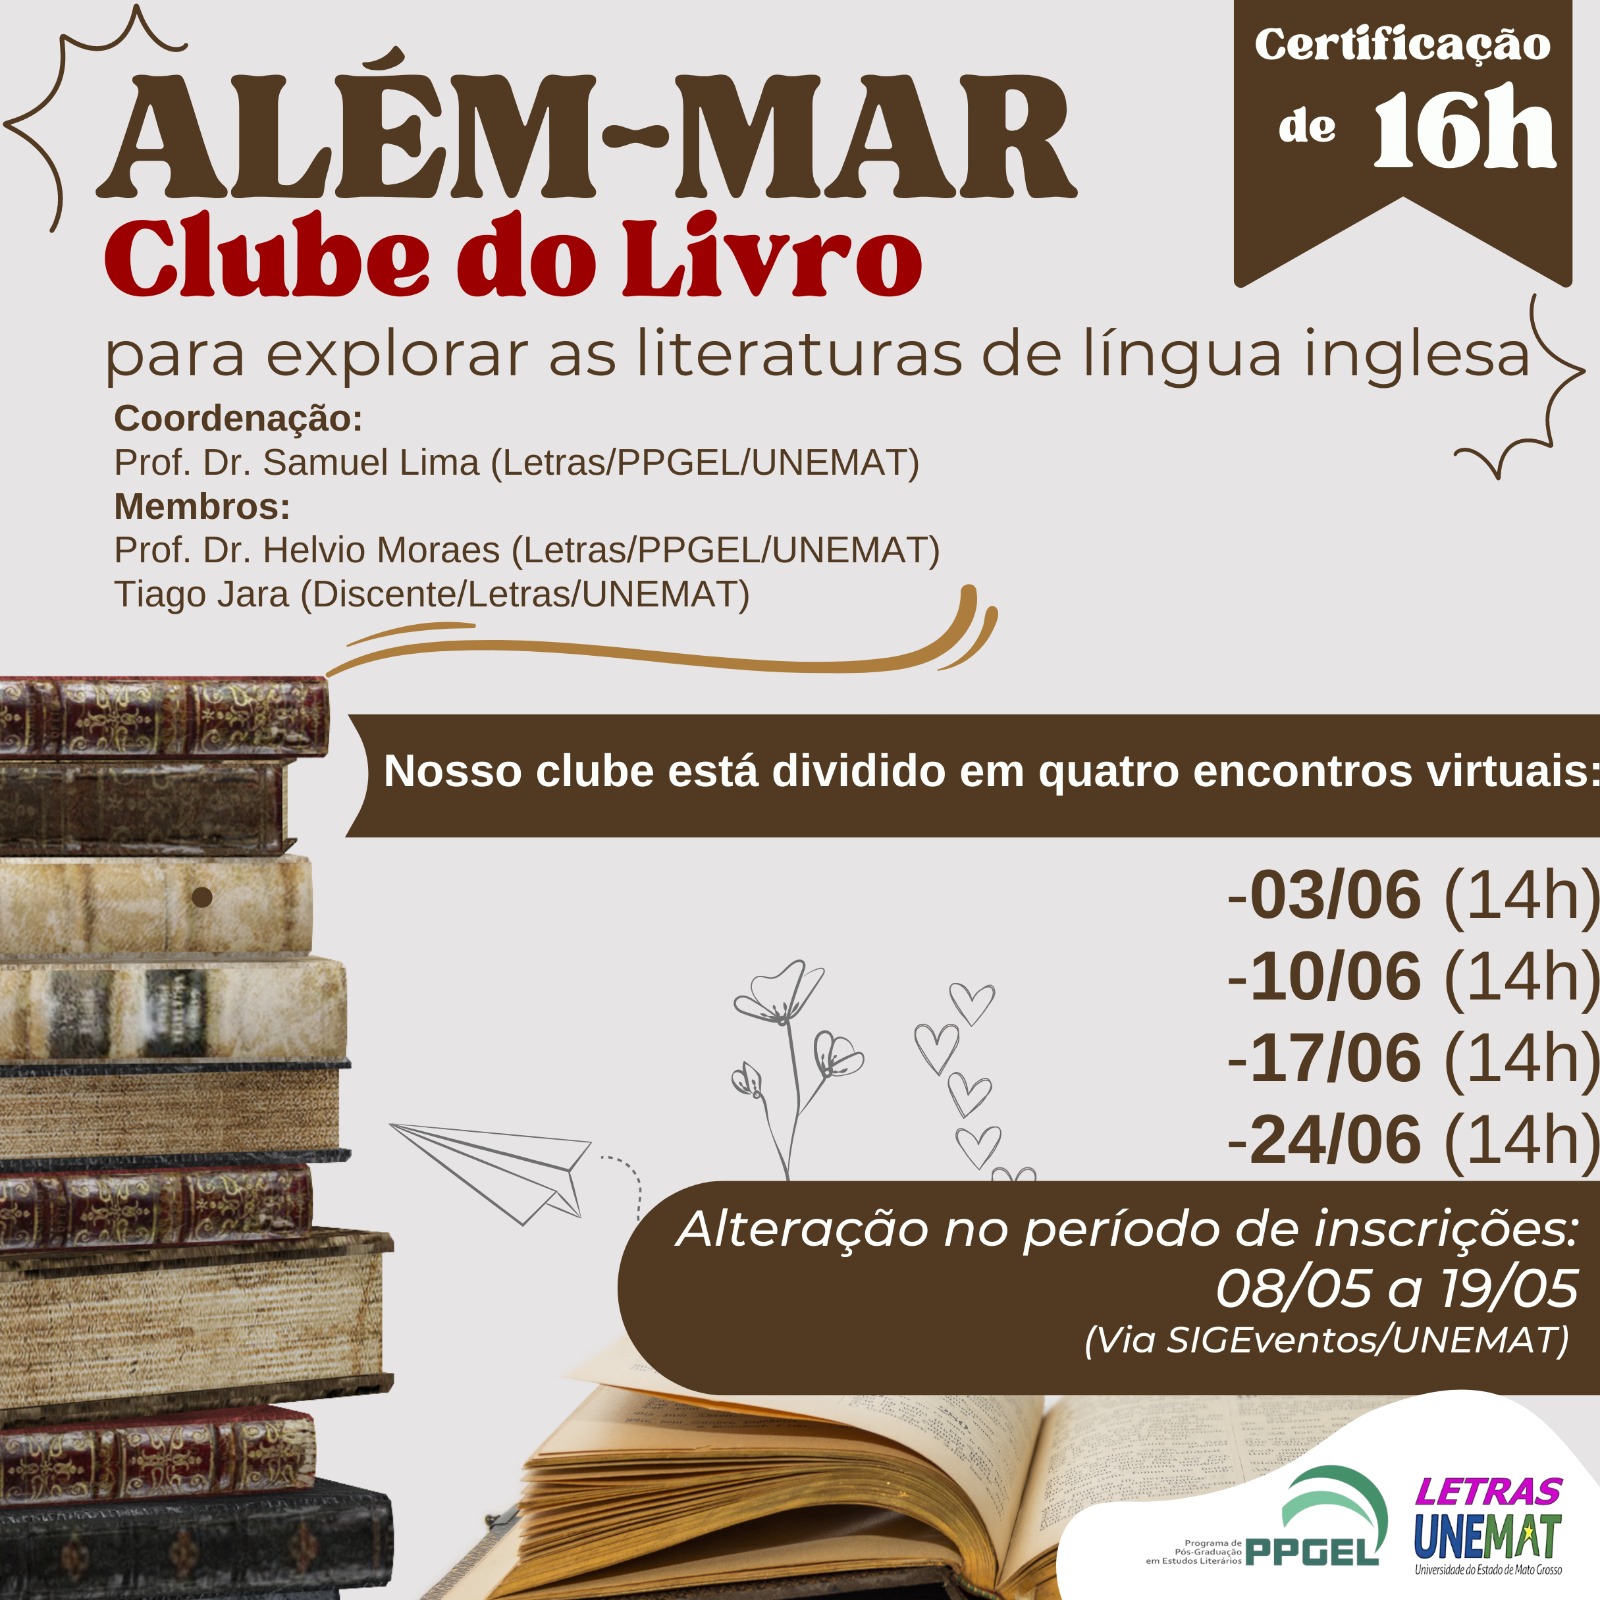 Além-mar: Clube do Livro para explorar as literaturas de língua inglesa